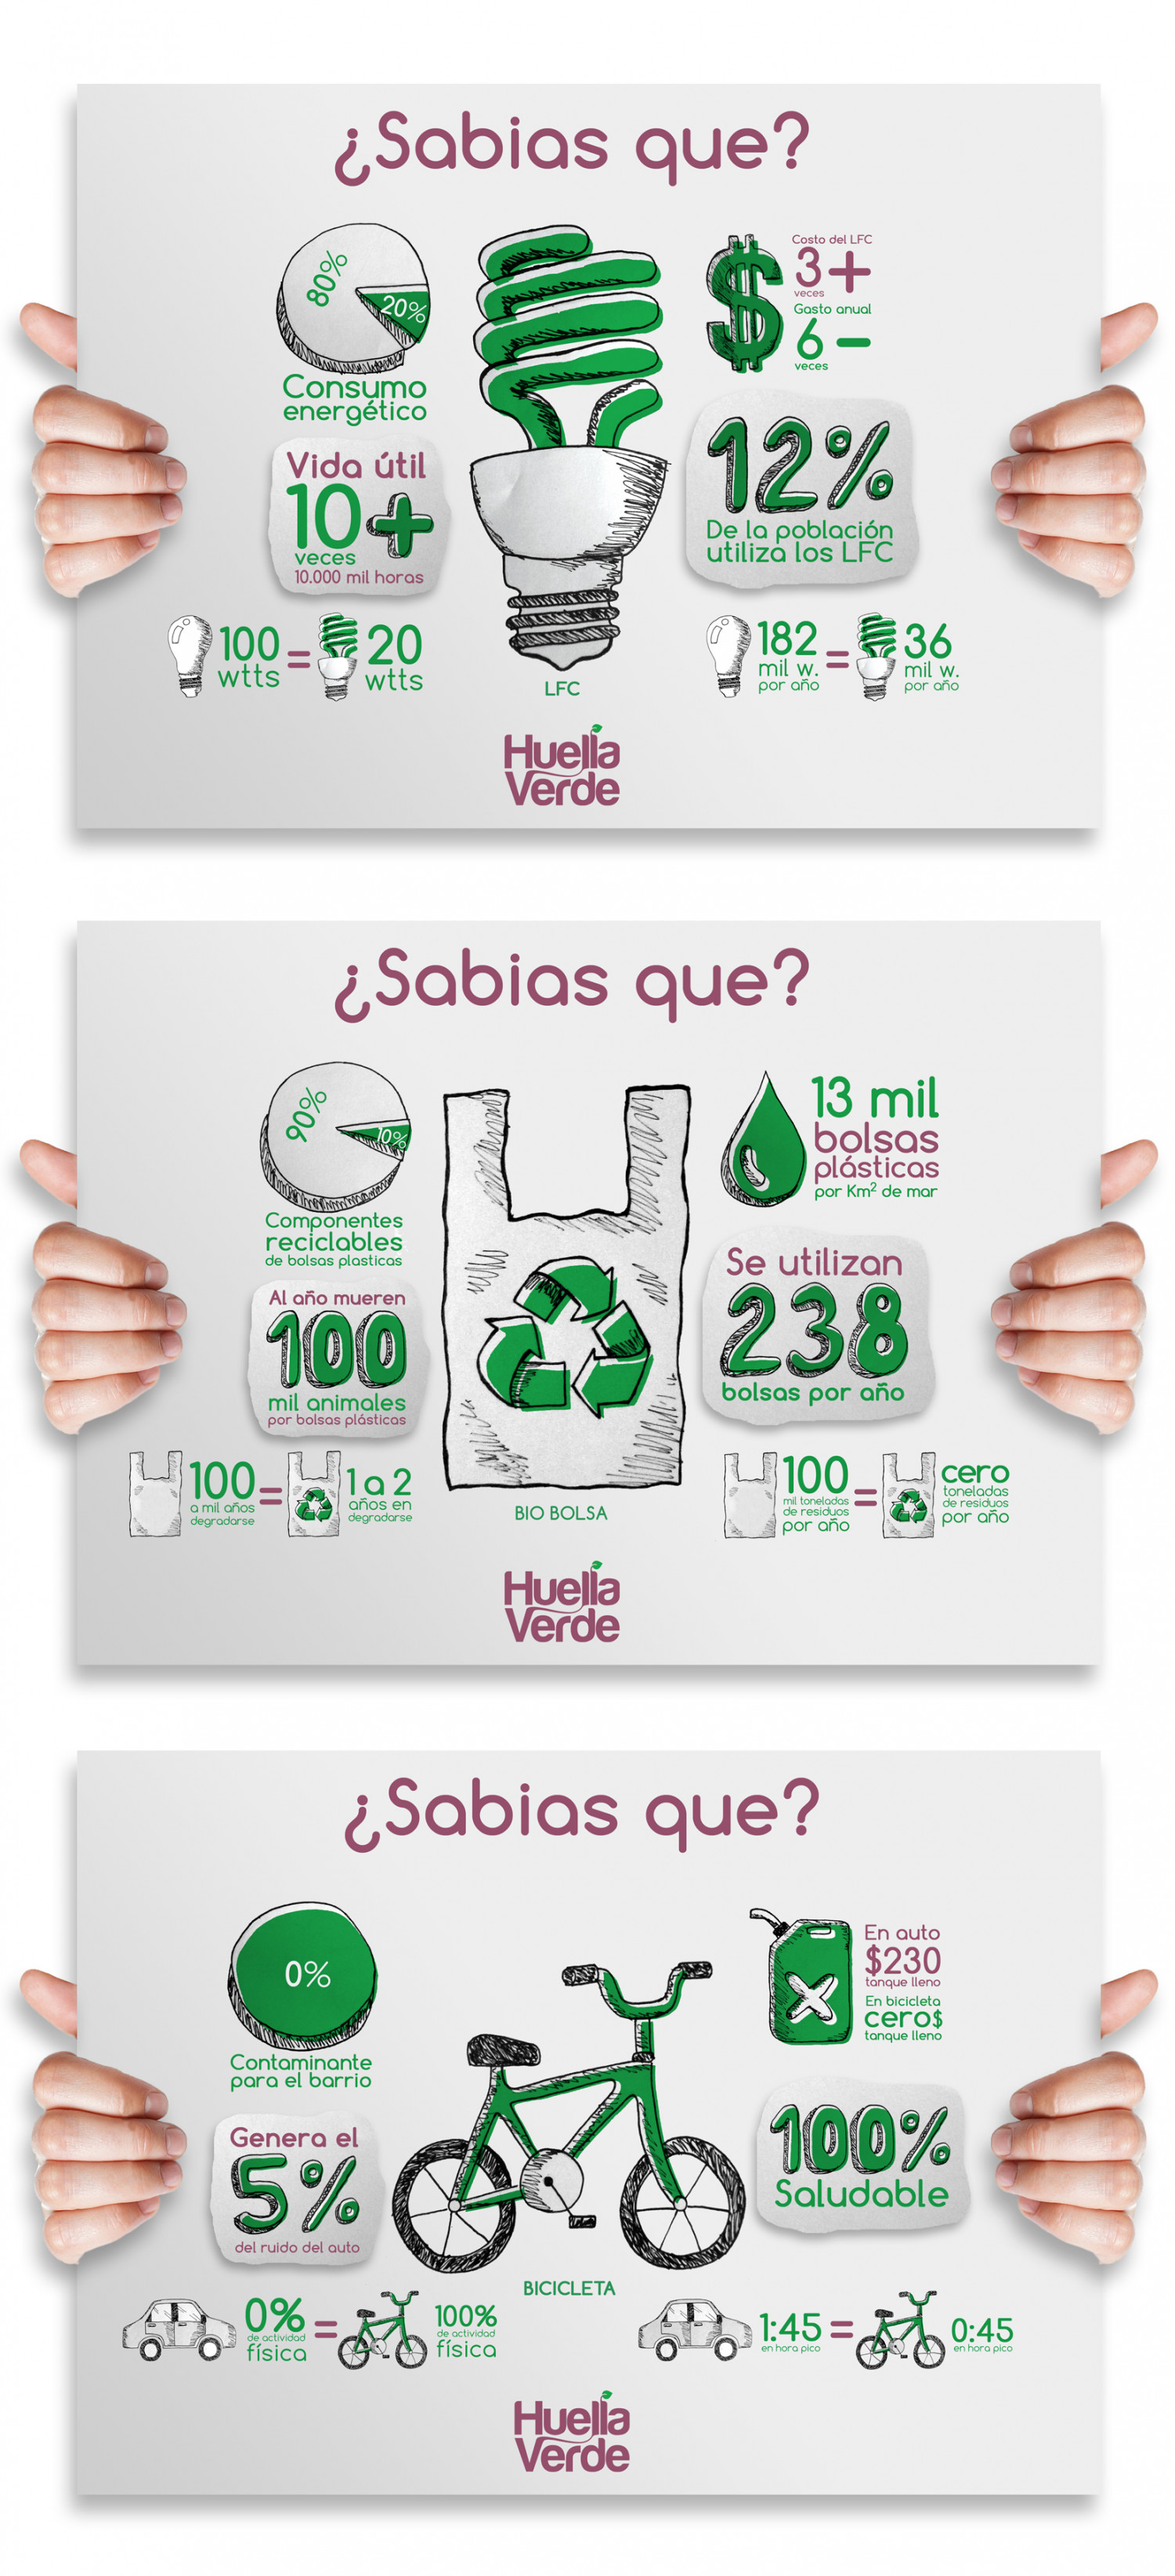 Huella Verde (Green Step) Infographic